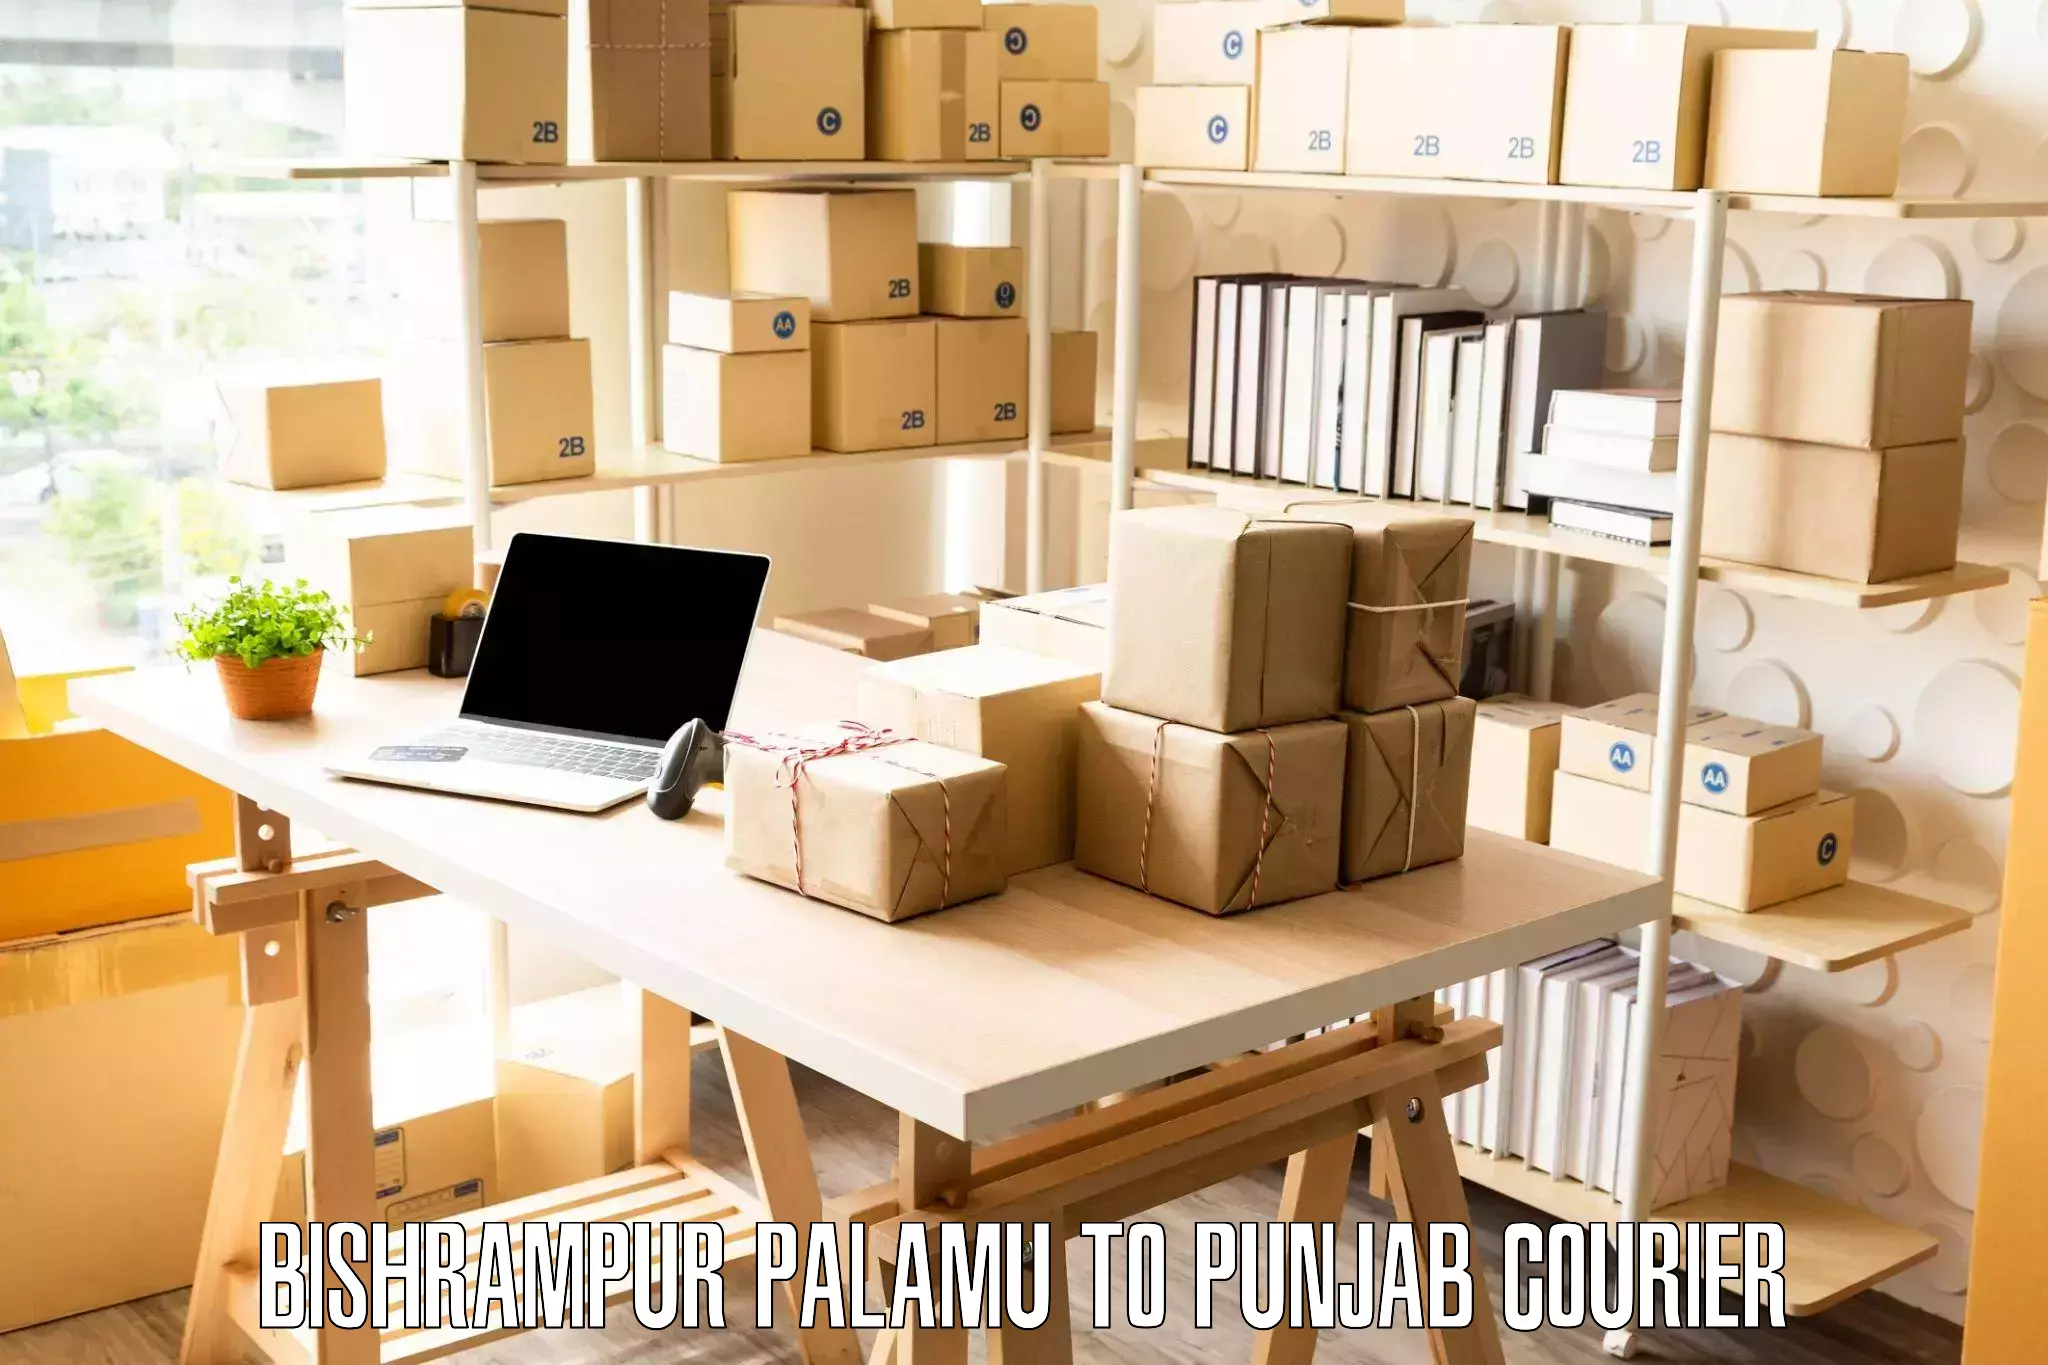 Efficient moving company Bishrampur Palamu to Patti Tarn Tara